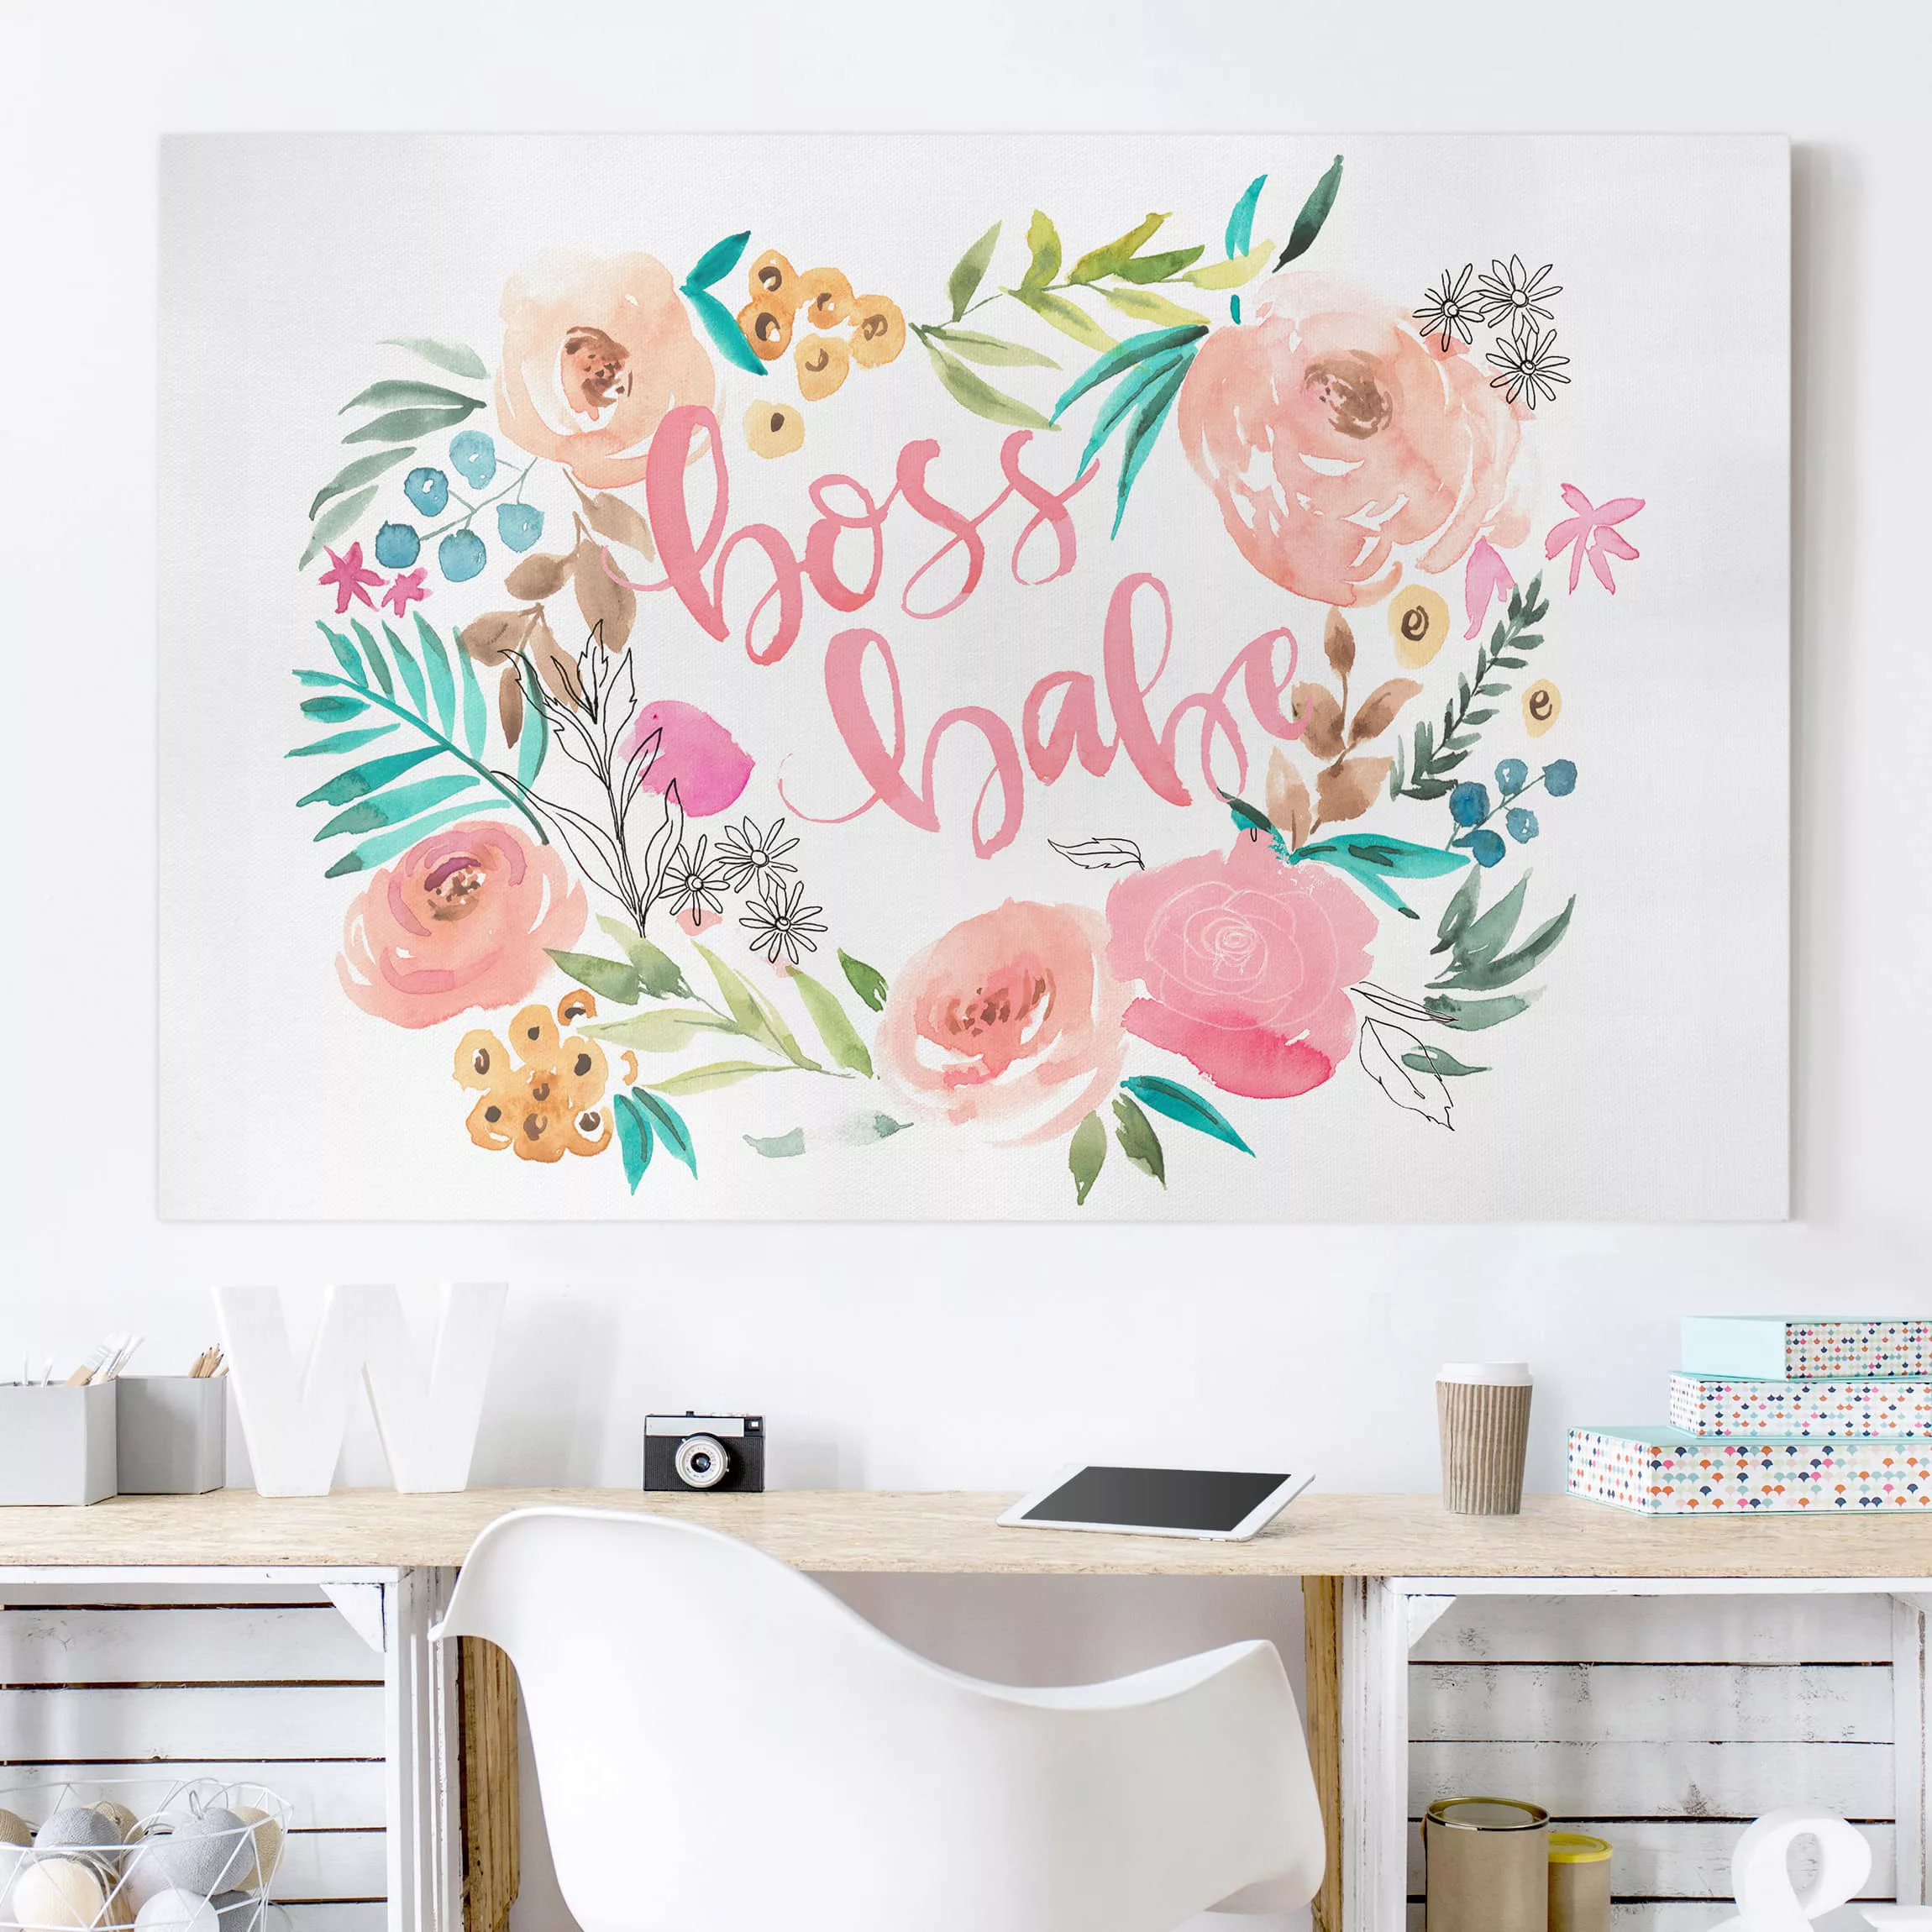 Leinwandbild Kinderzimmer - Querformat Rosa Blüten - Boss Babe günstig online kaufen